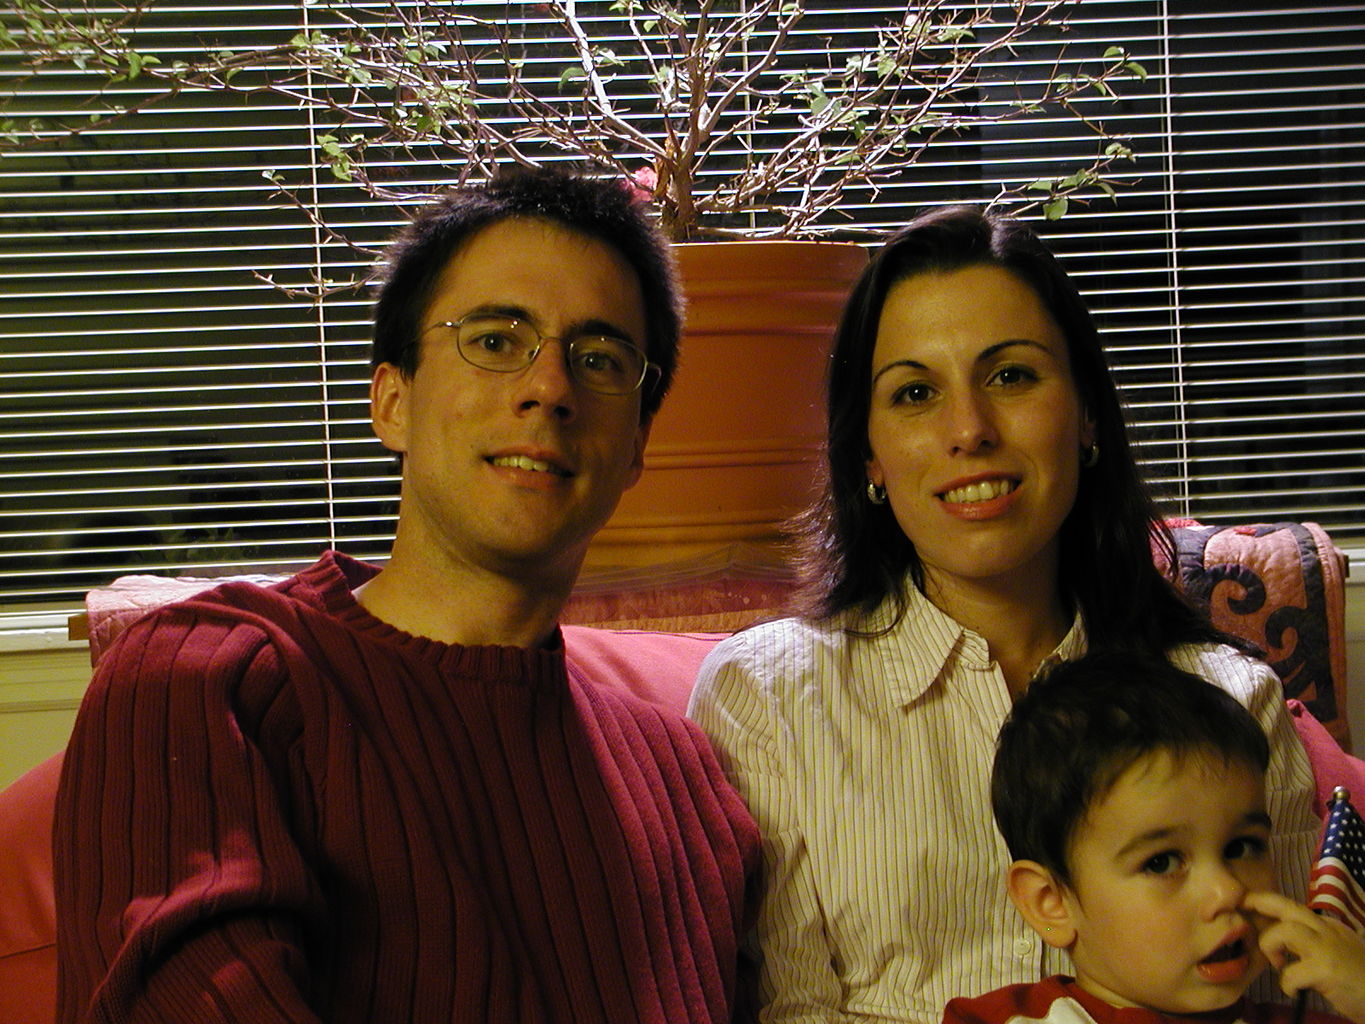 Family Shots for Christmas 2004
